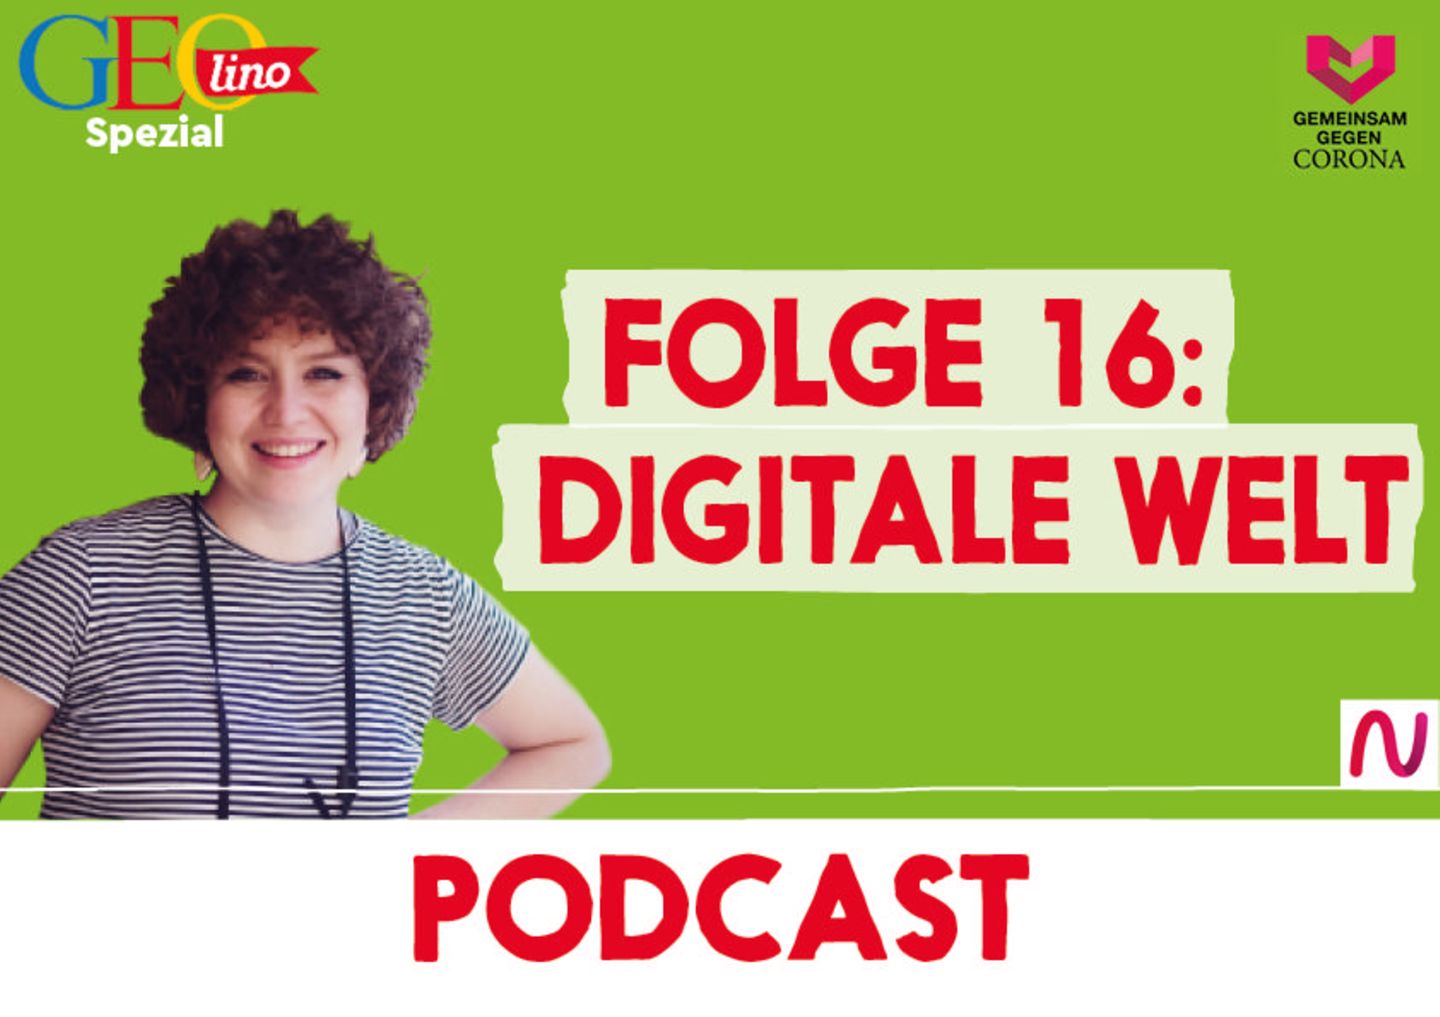 GEOlino-Podcast Folge 16: Gemeinsam gegen Corona: Digitale Welt